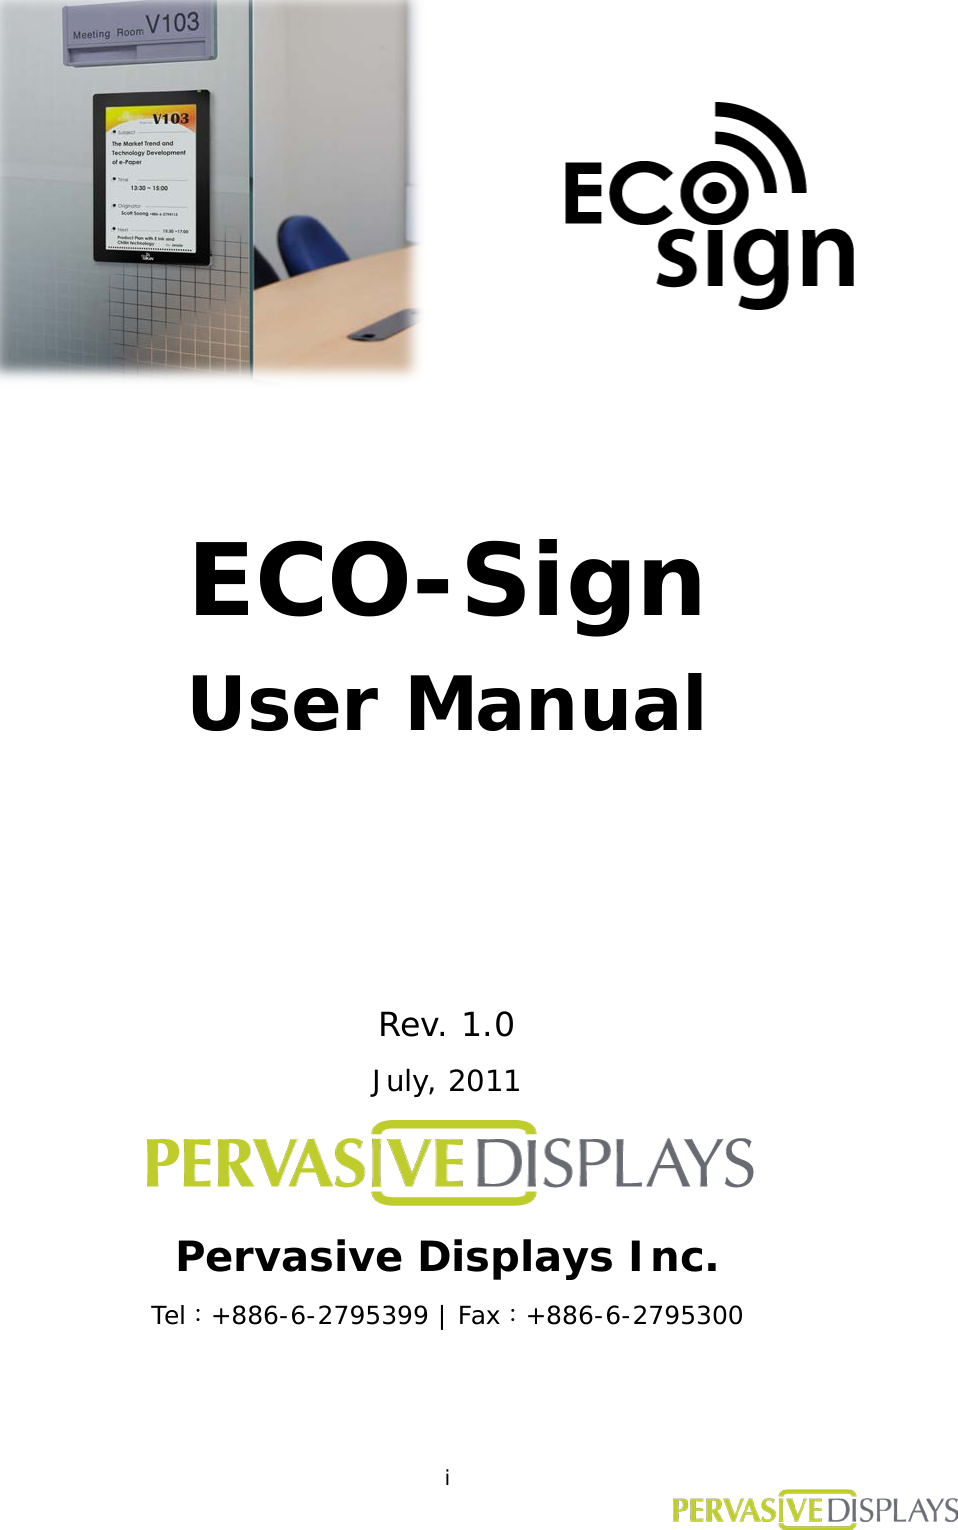  i        ECO-Sign User Manual     Rev. 1.0 July, 2011  Pervasive Displays Inc. Tel：+886-6-2795399 | Fax：+886-6-2795300  